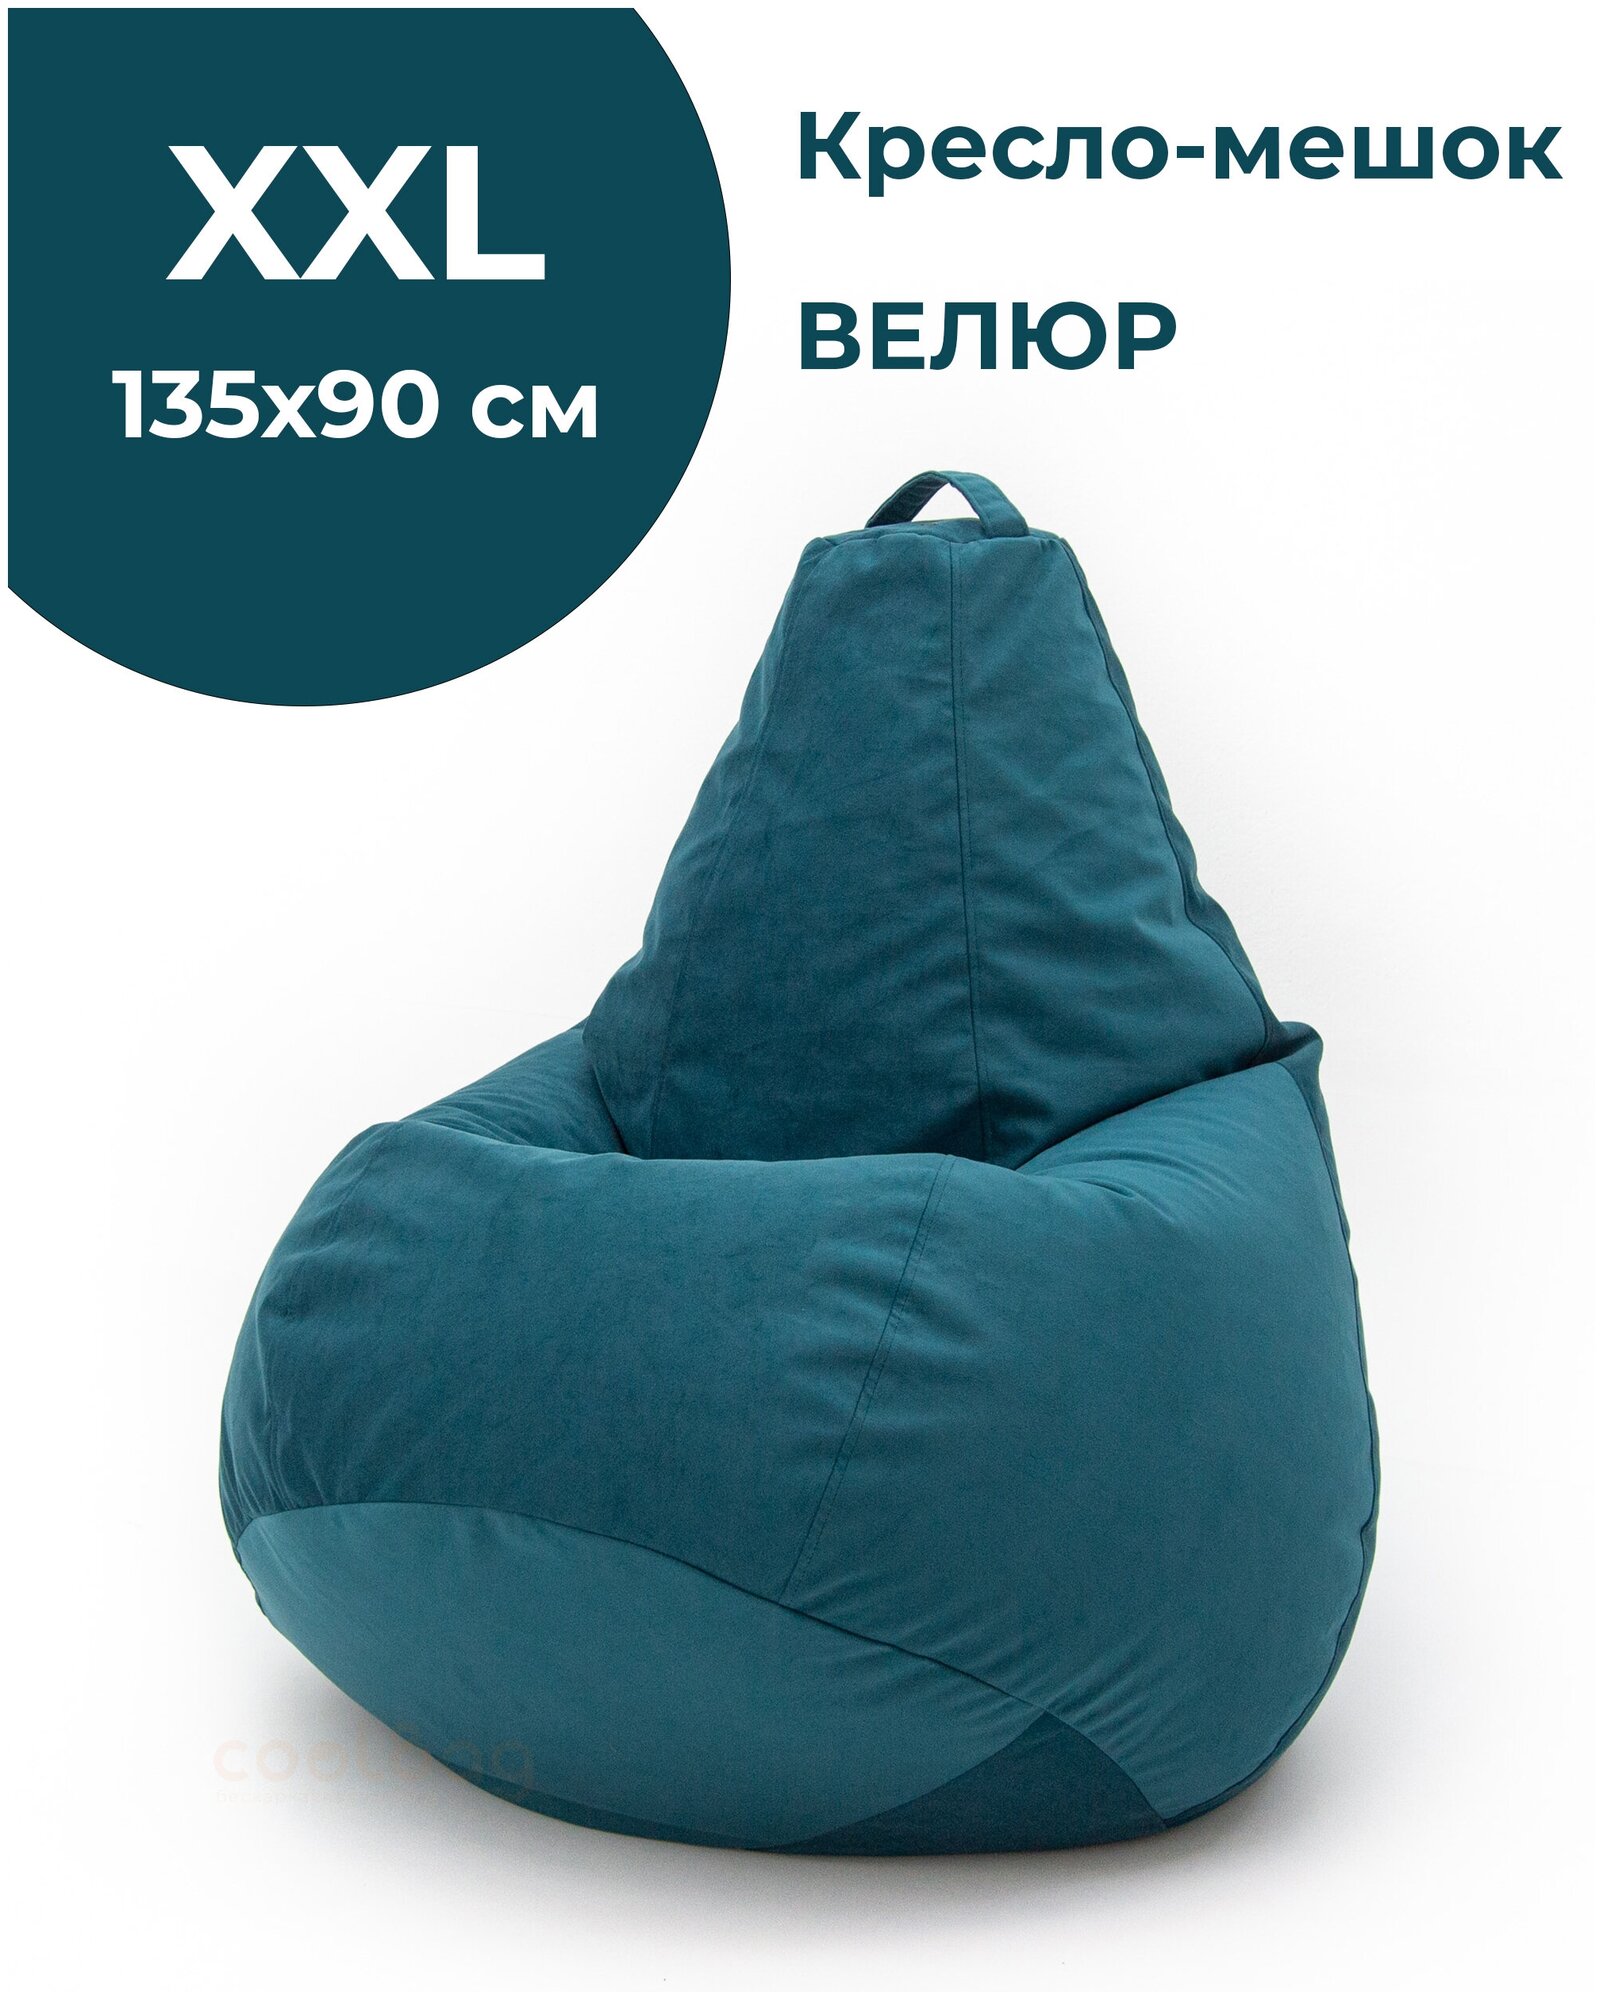 Кресло-мешок груша XXL "Сохо Атлантик" (135х90 см, велюр)